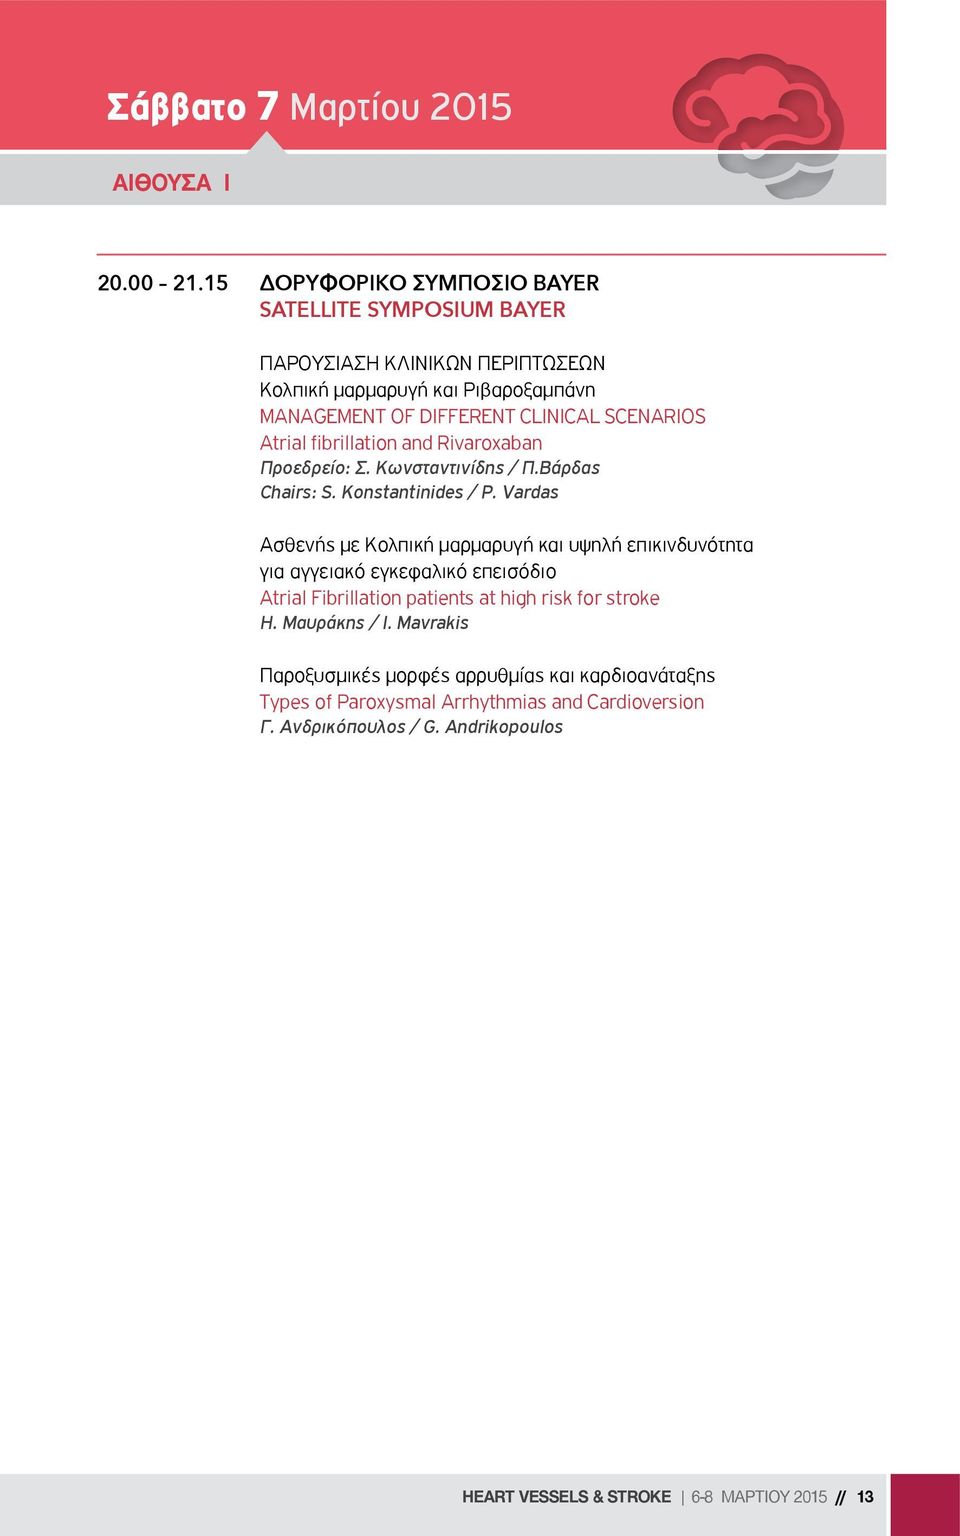 Scenarios Atrial fibrillation and Rivaroxaban Προεδρείο: Σ. Κωνσταντινίδης / Π.Βάρδας Chairs: S. Konstantinides / P.